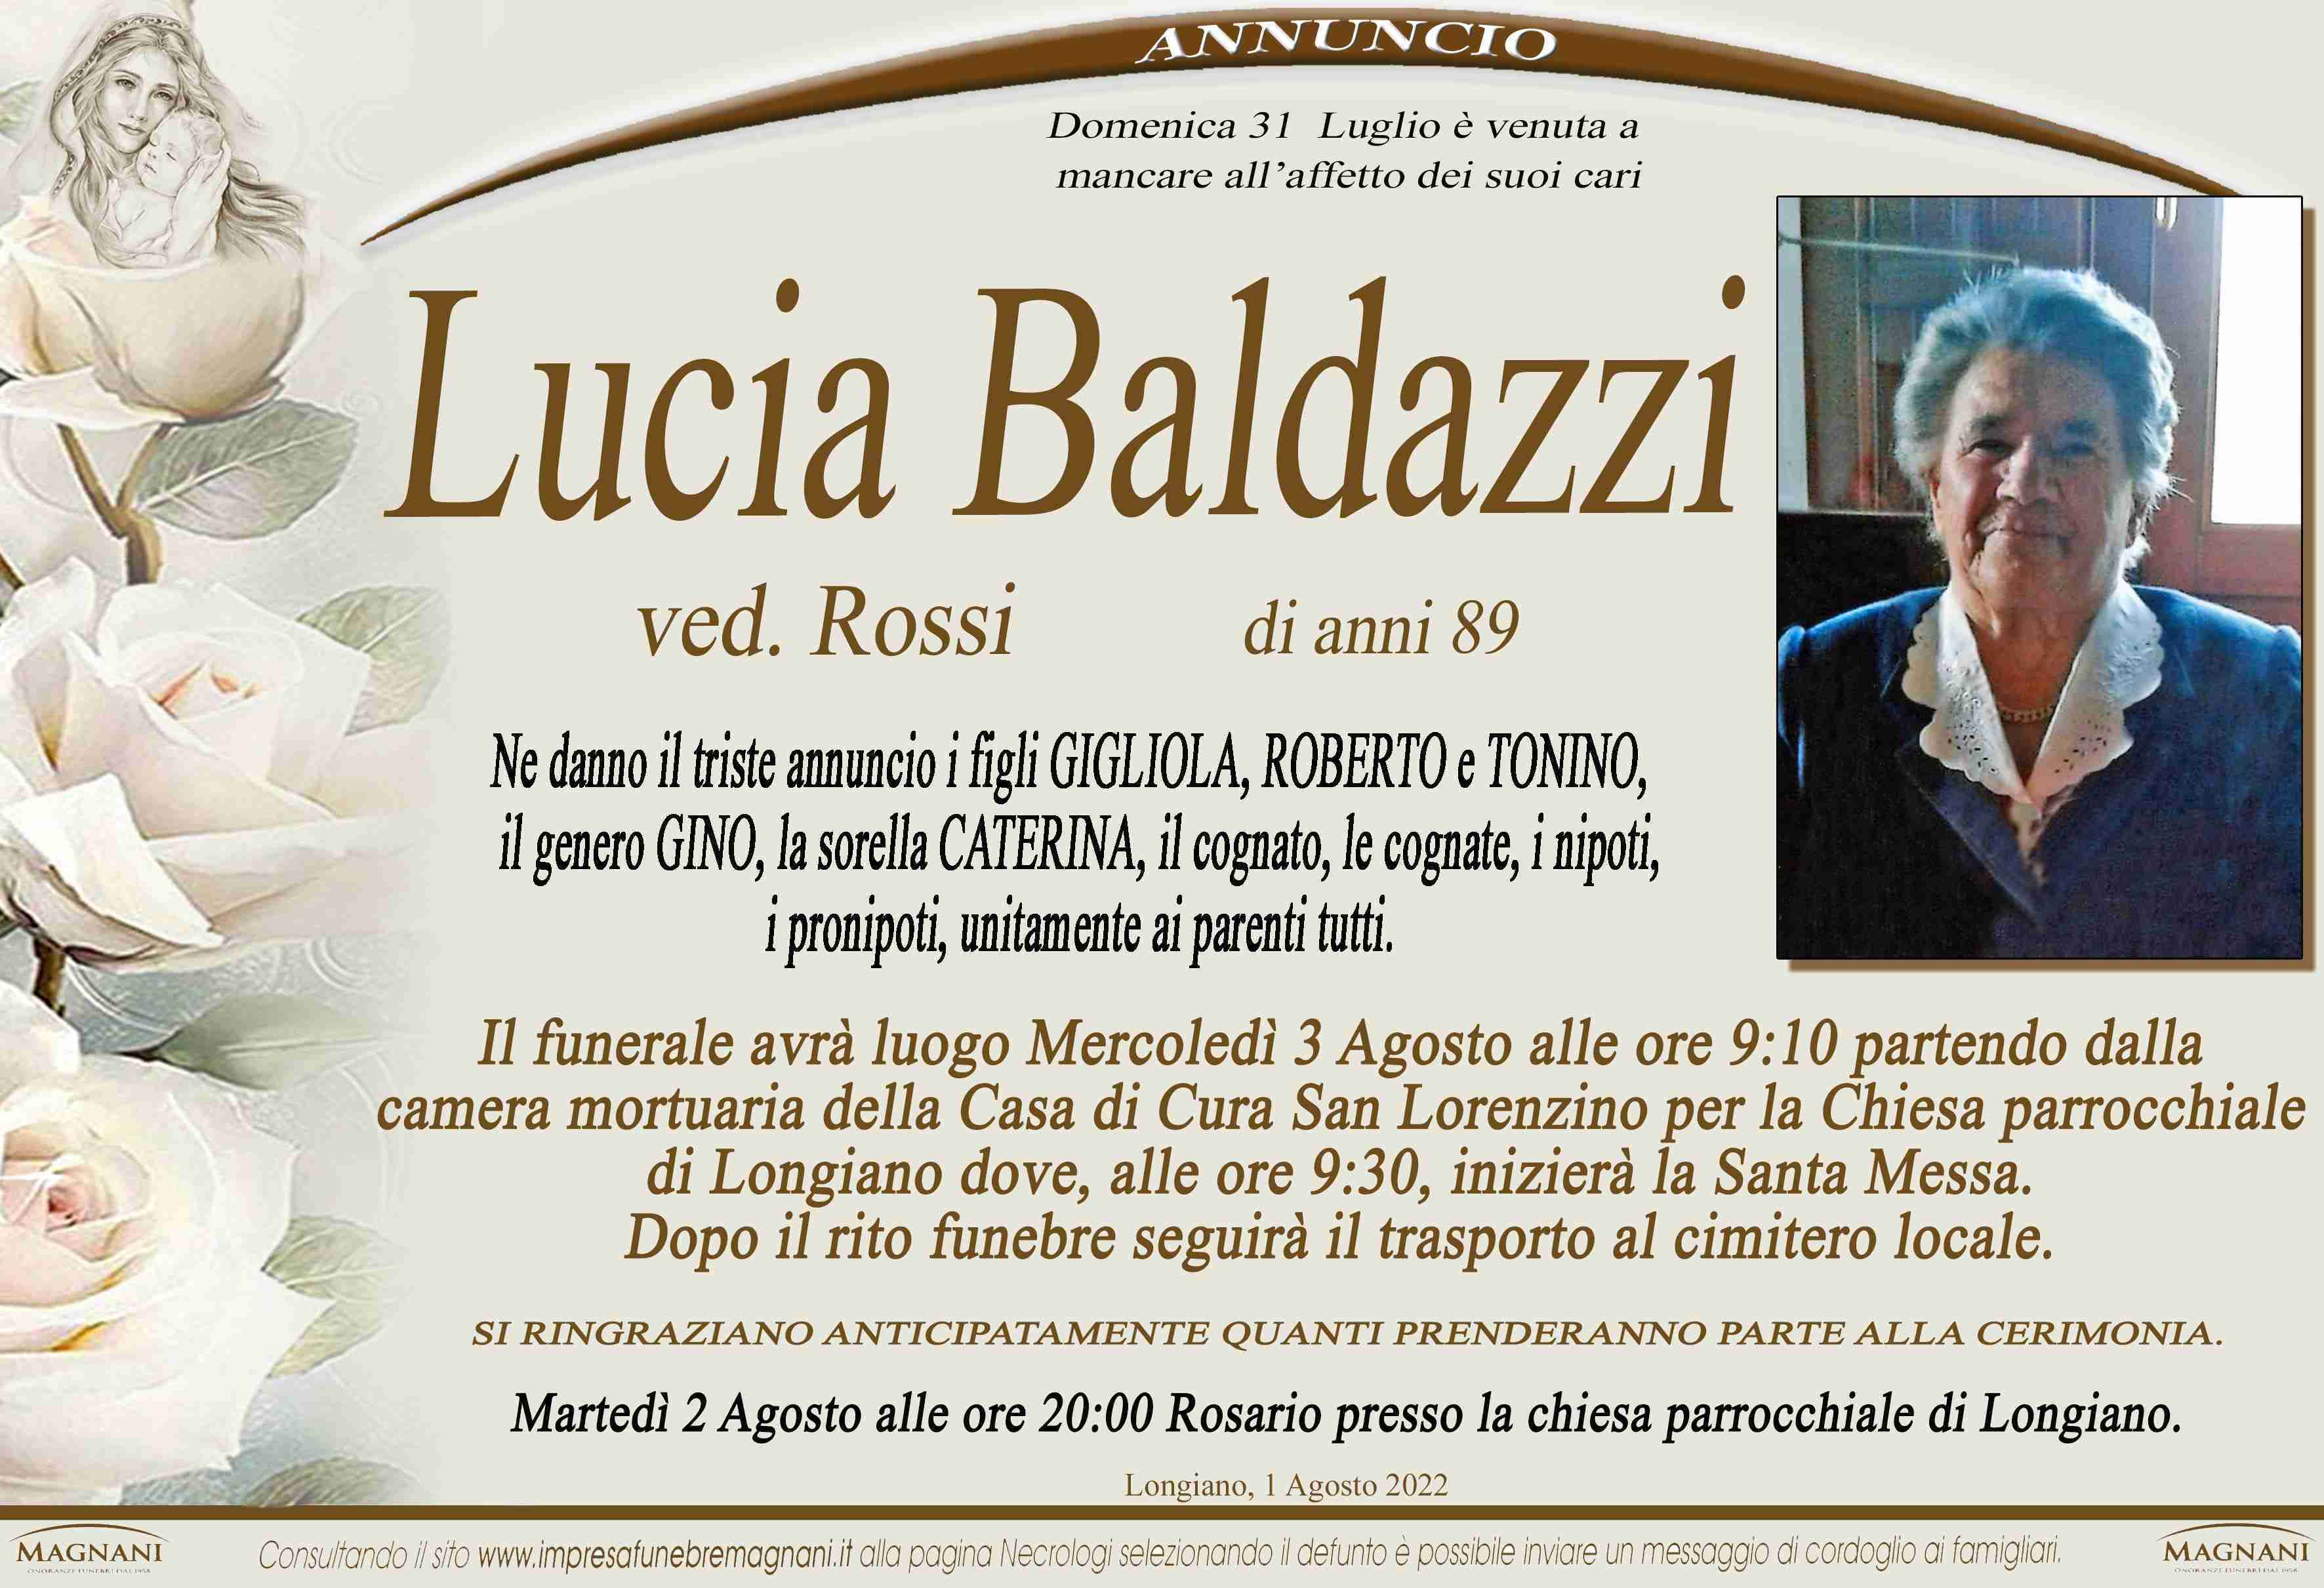 Lucia Baldazzi